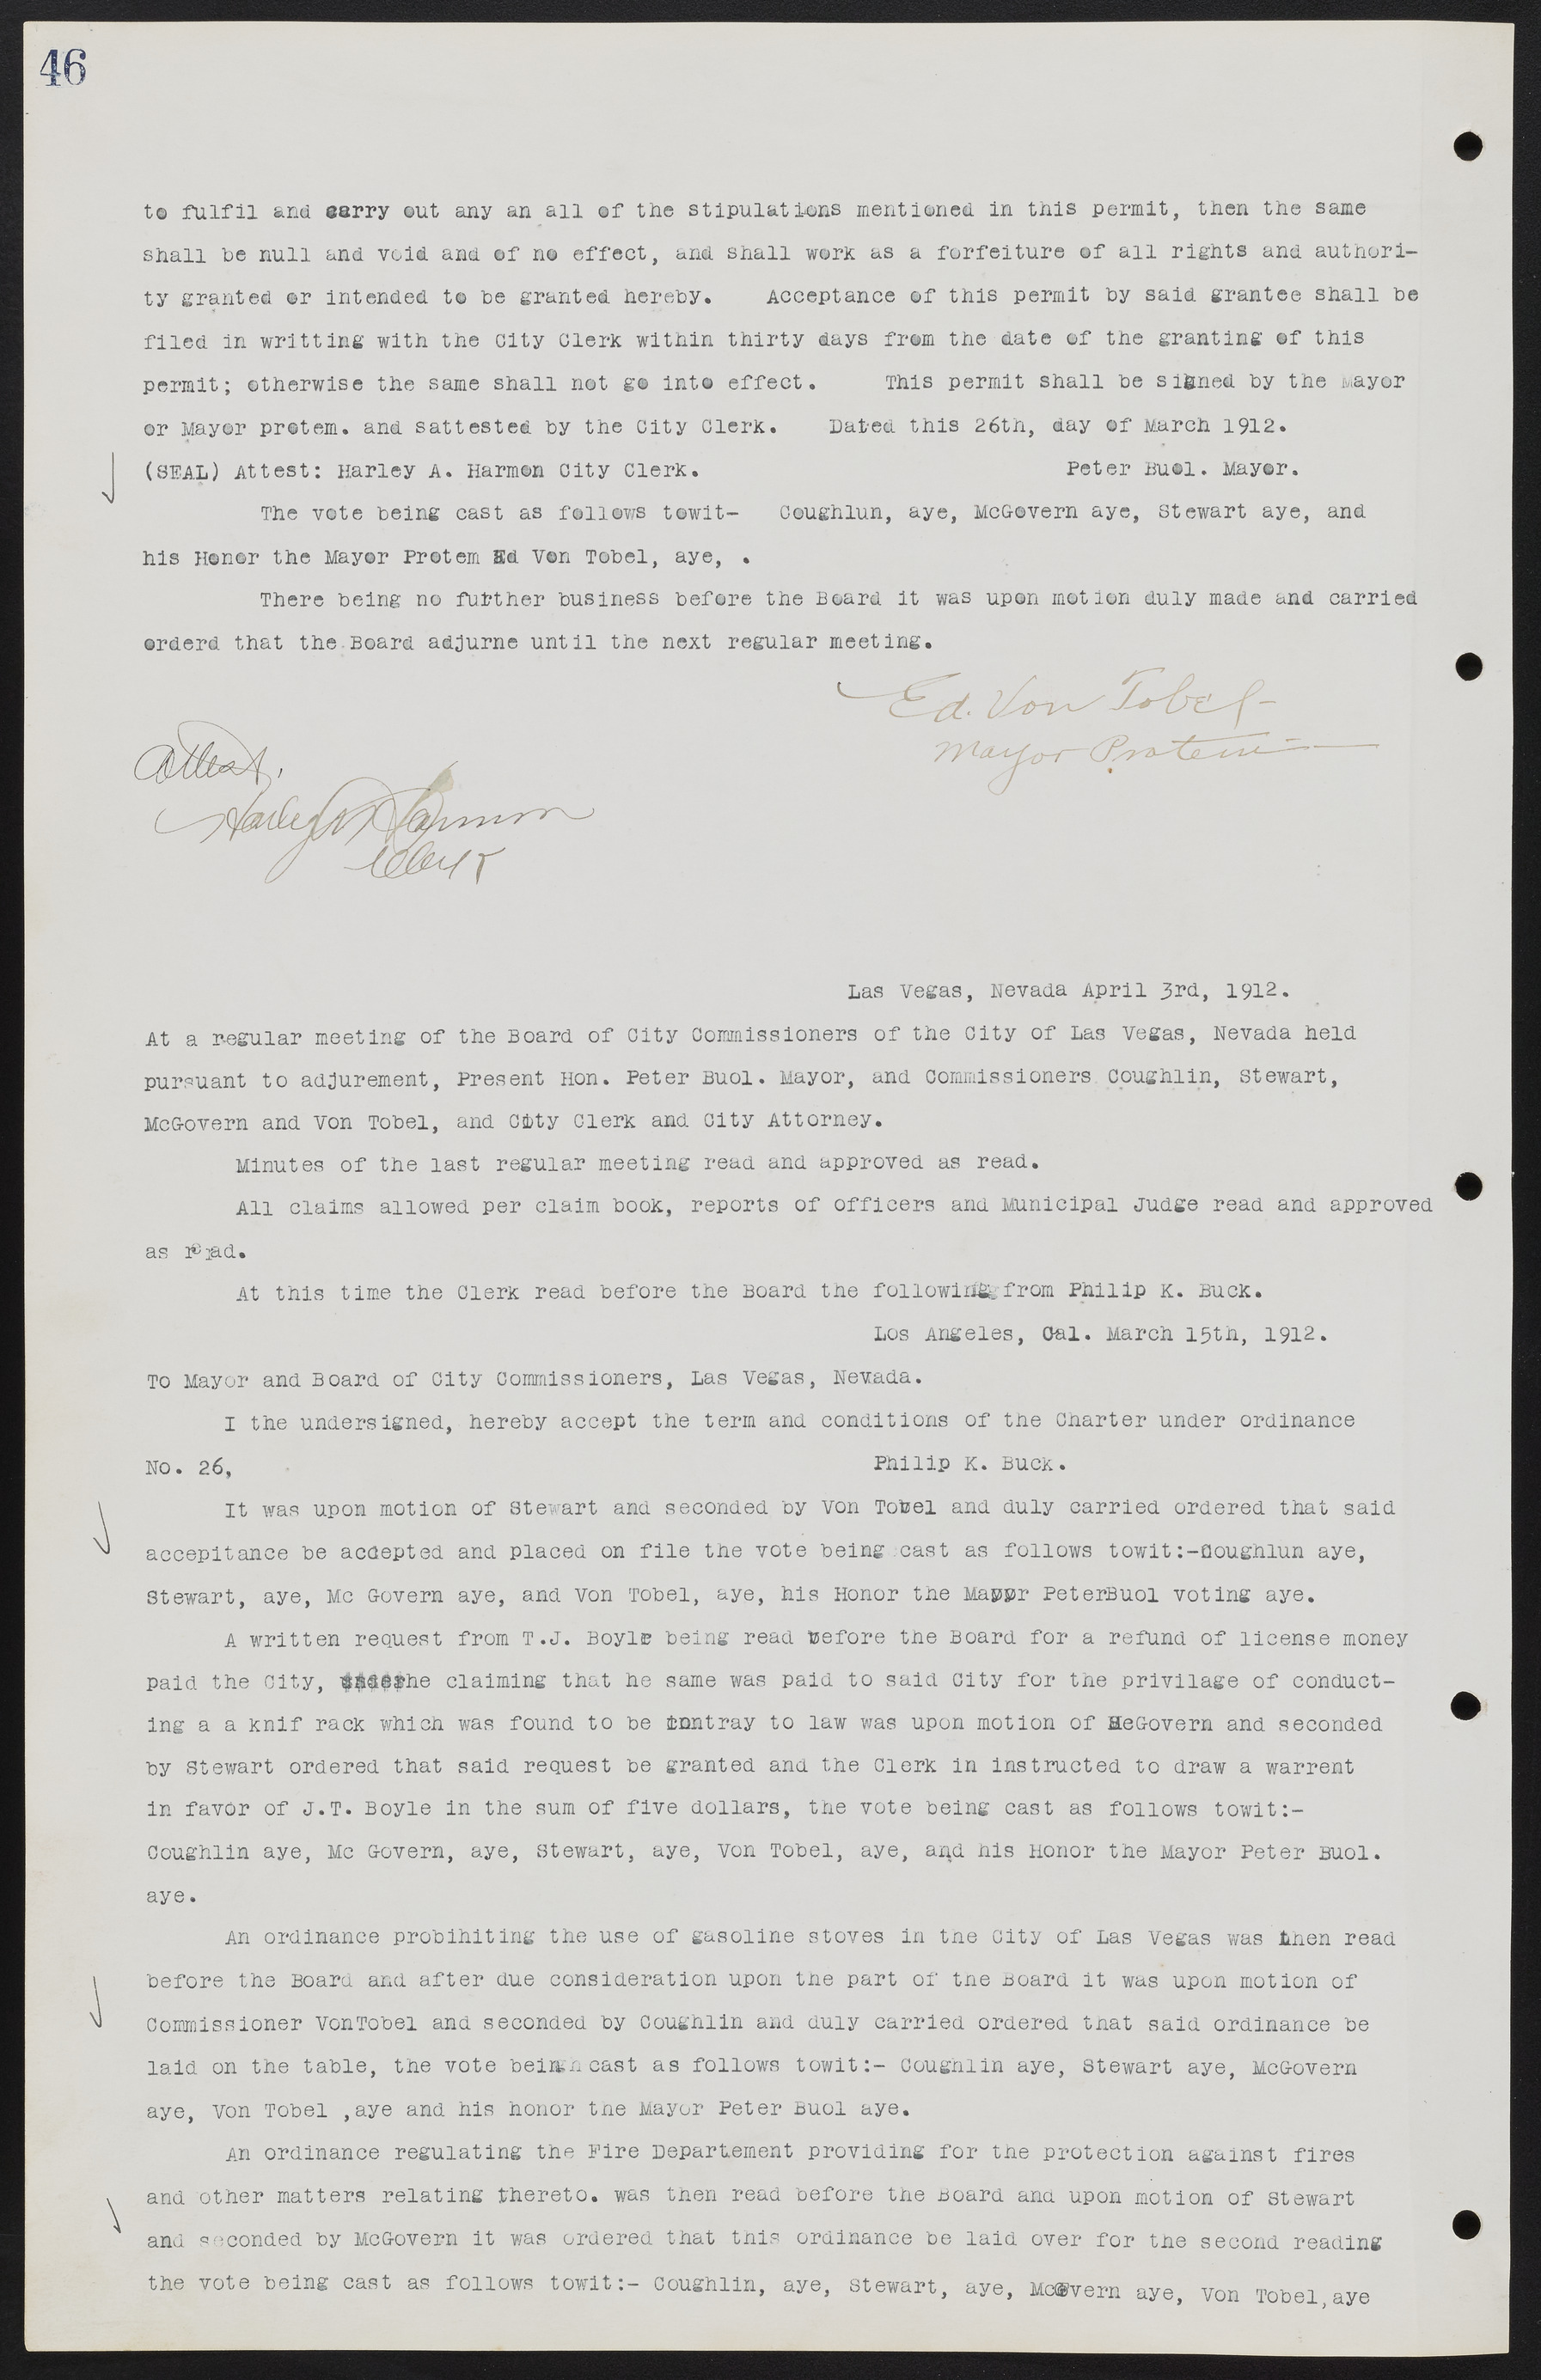 Las Vegas City Commission Minutes, June 22, 1911 to February 7, 1922, lvc000001-60